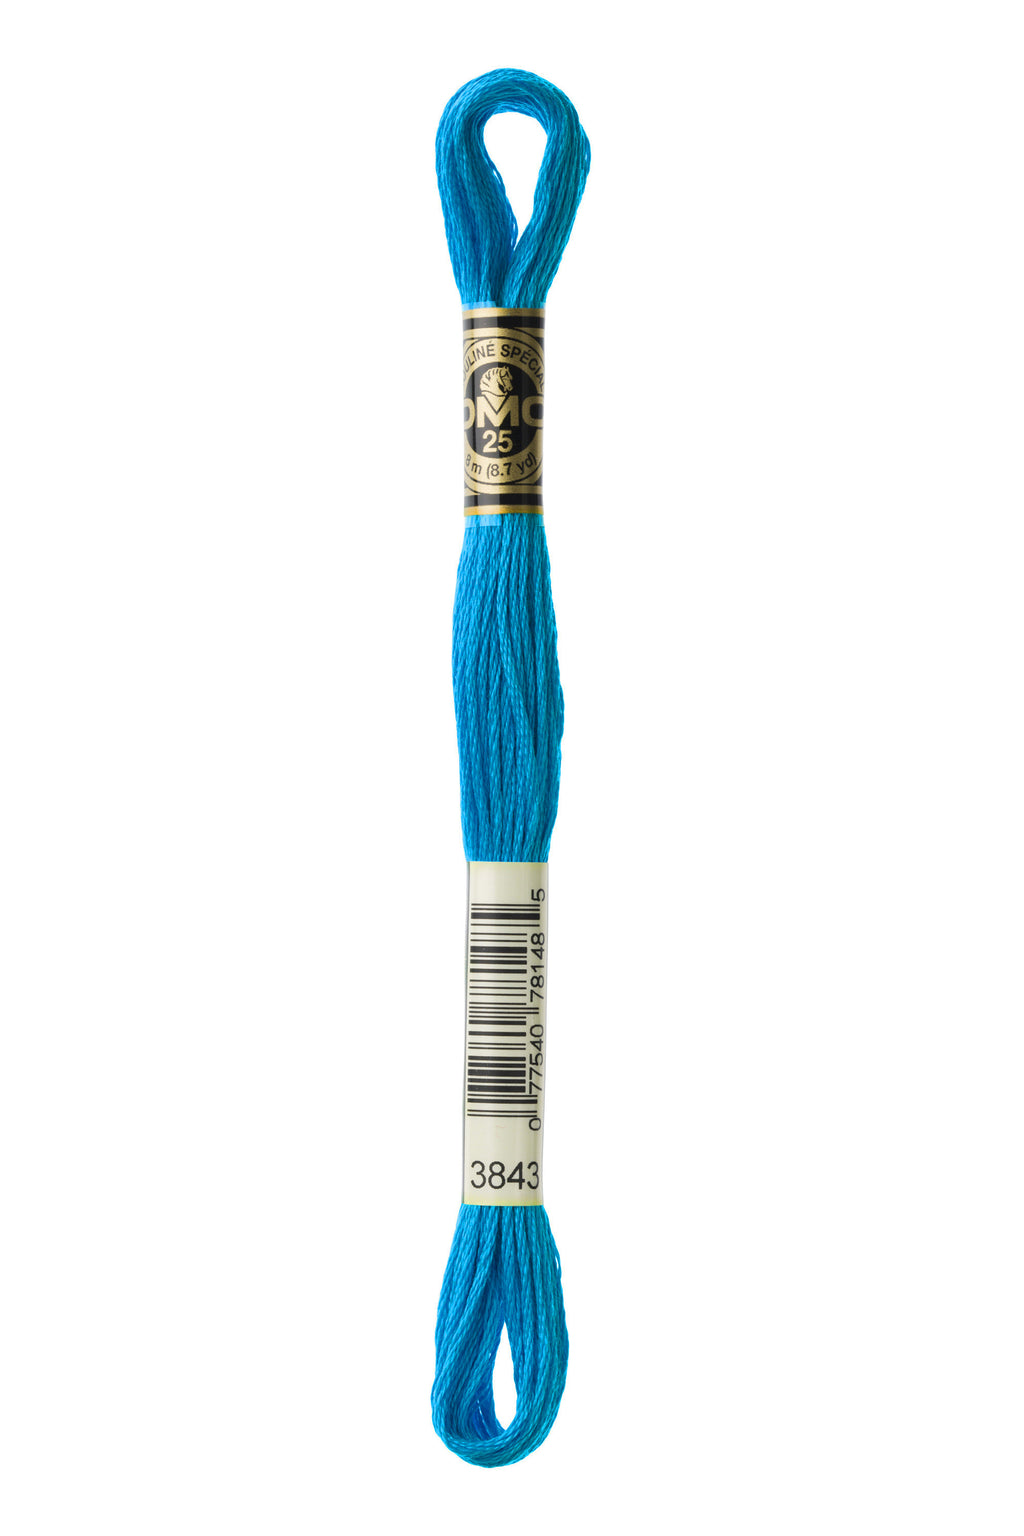 DMC 3843 Cotton 6 Strand Floss Electric Blue